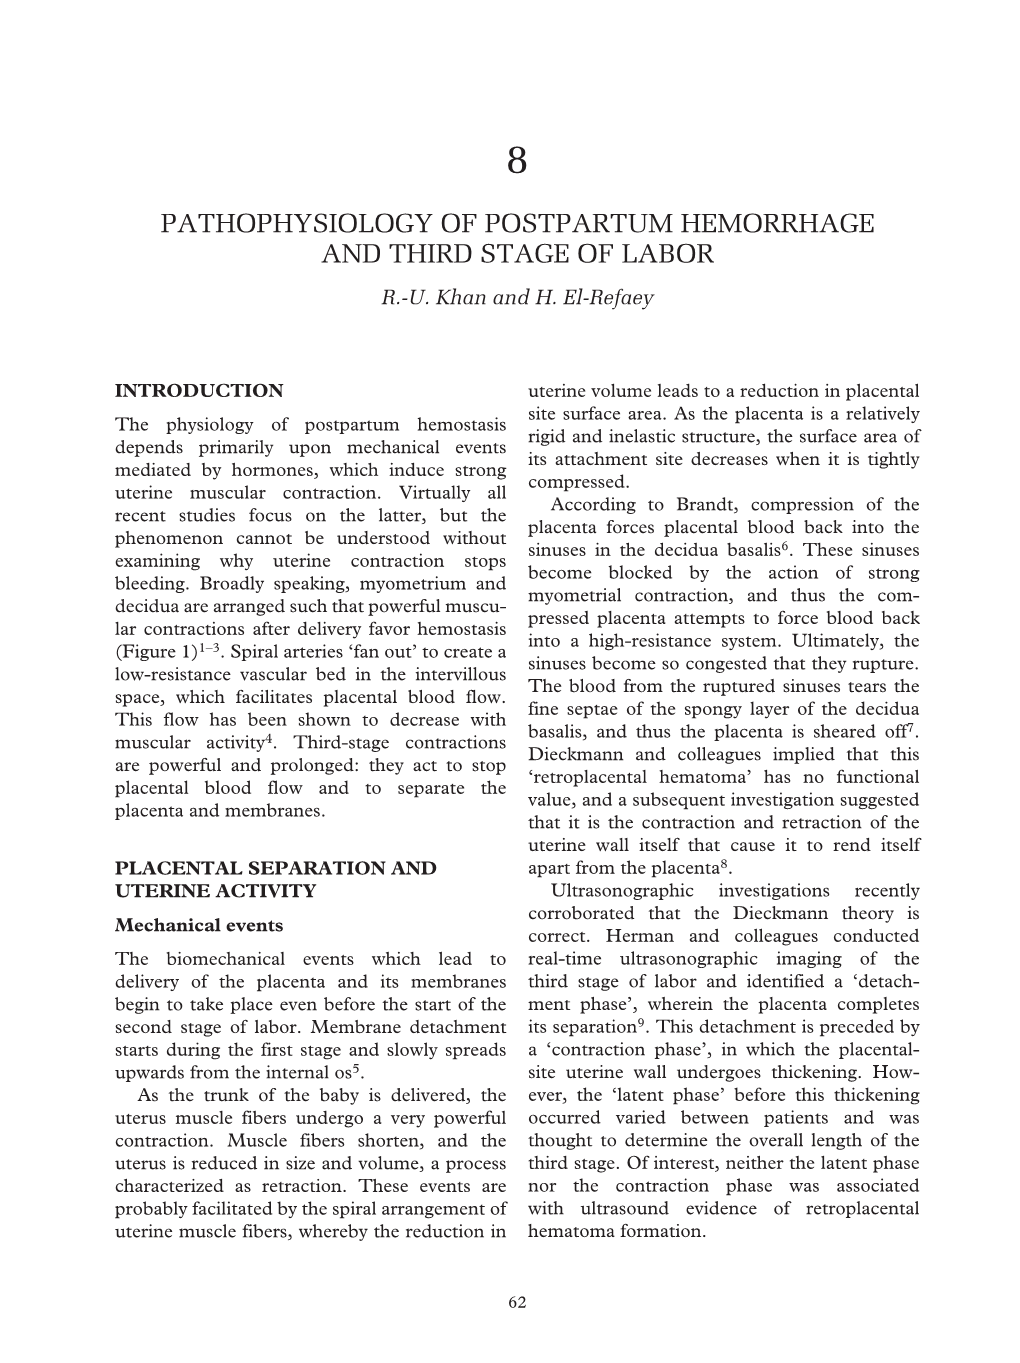 Chapter 8: Pathophysiology of Postpartum Hemorrhage and Third